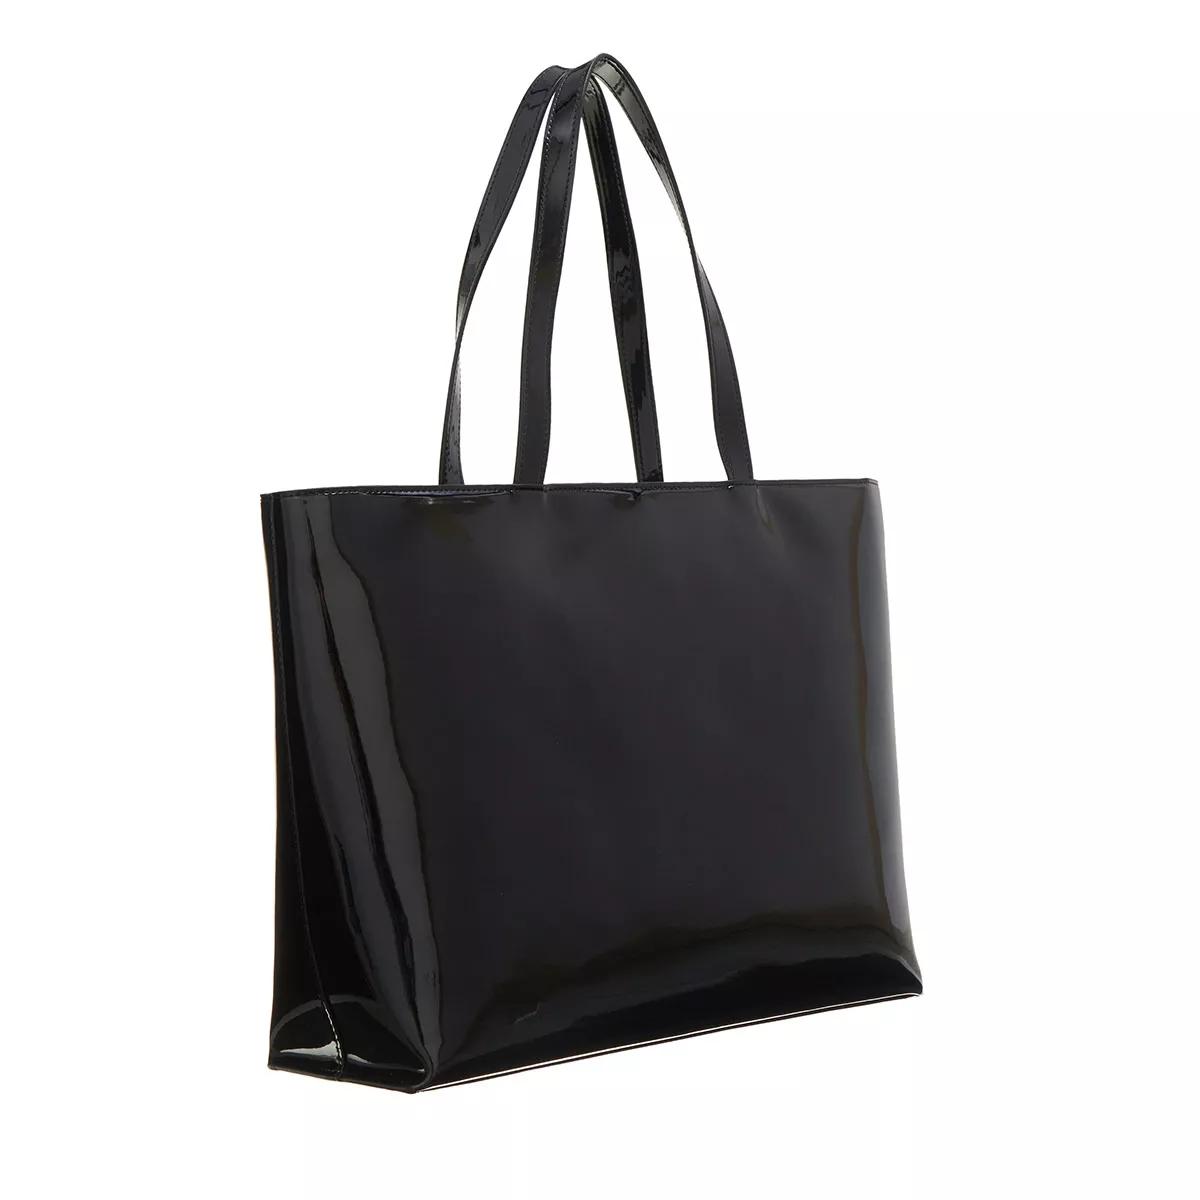 Chiara Ferragni Shoppers Range D Girls Club Sketch 03 Bags in zwart